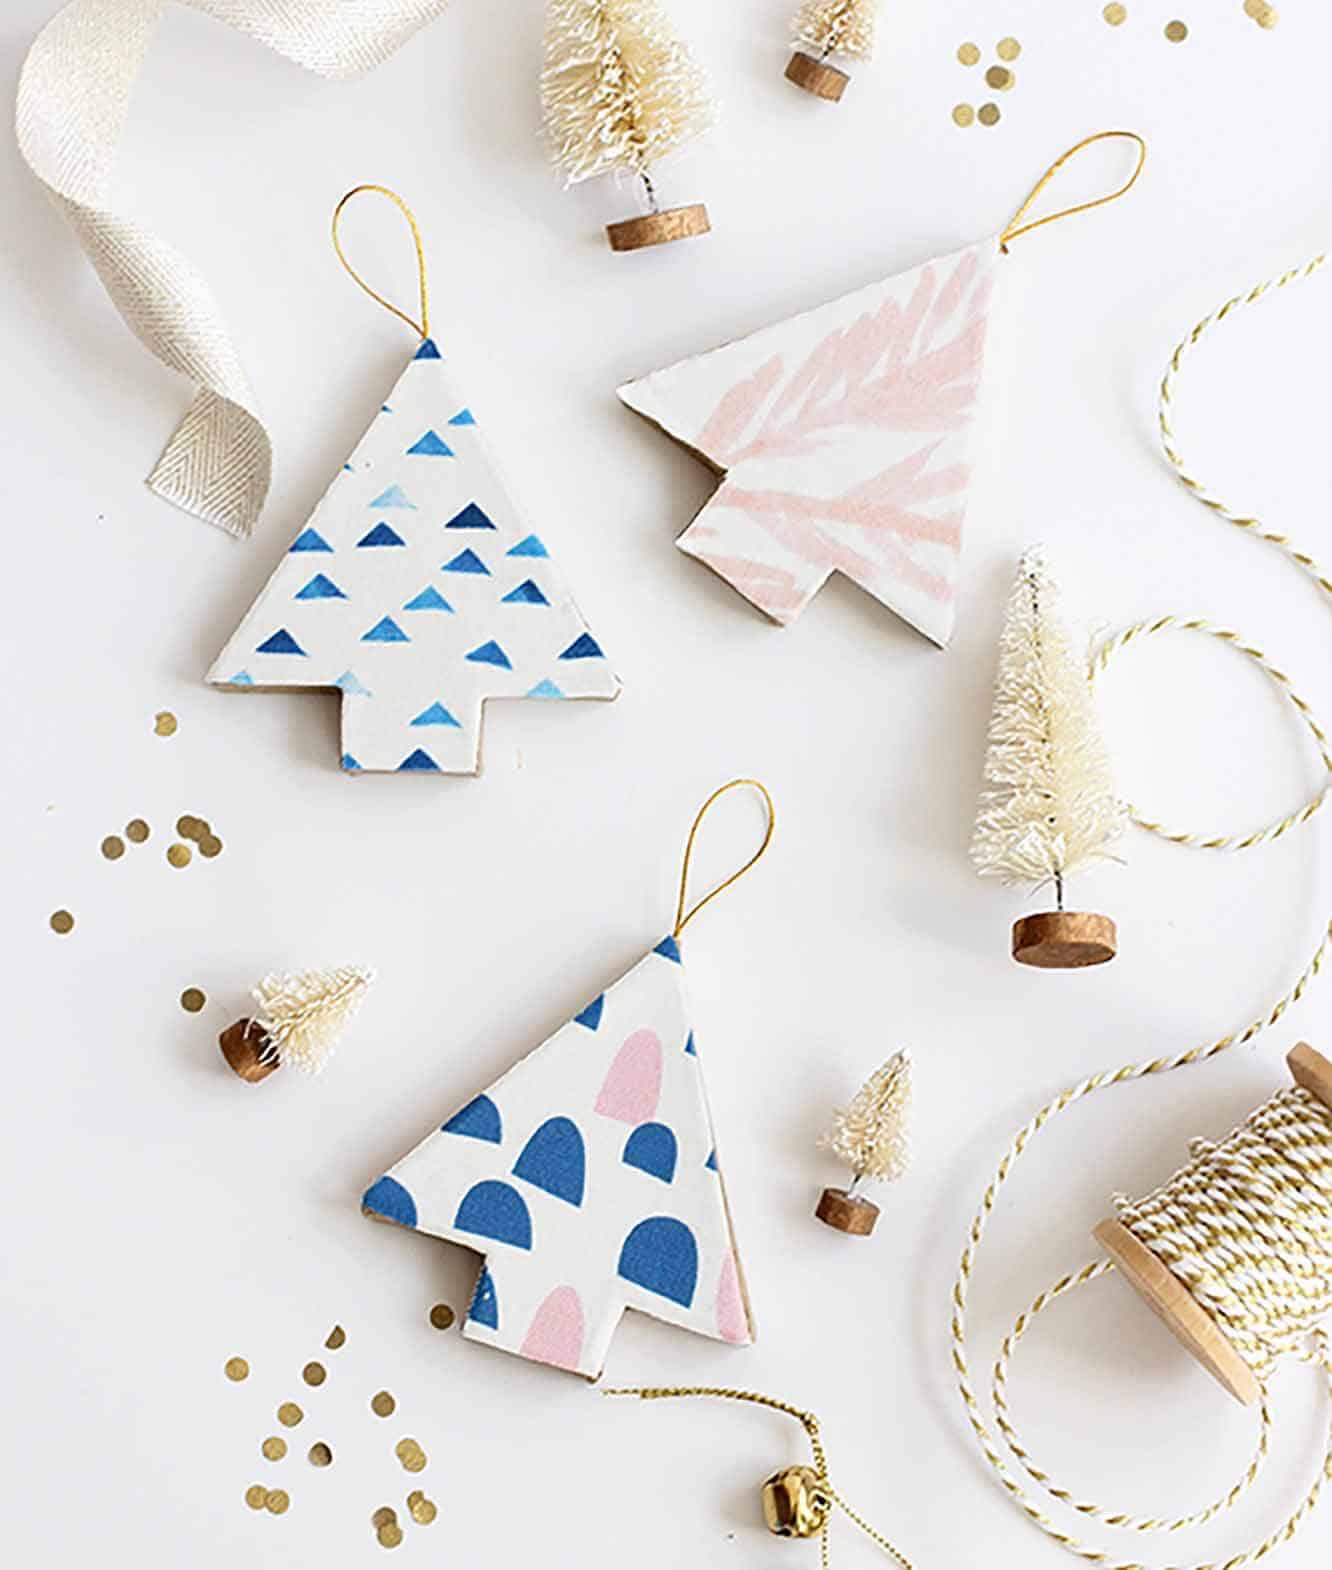 DIY Fabric Covered Tree Ornaments: small handmade gift ideas	